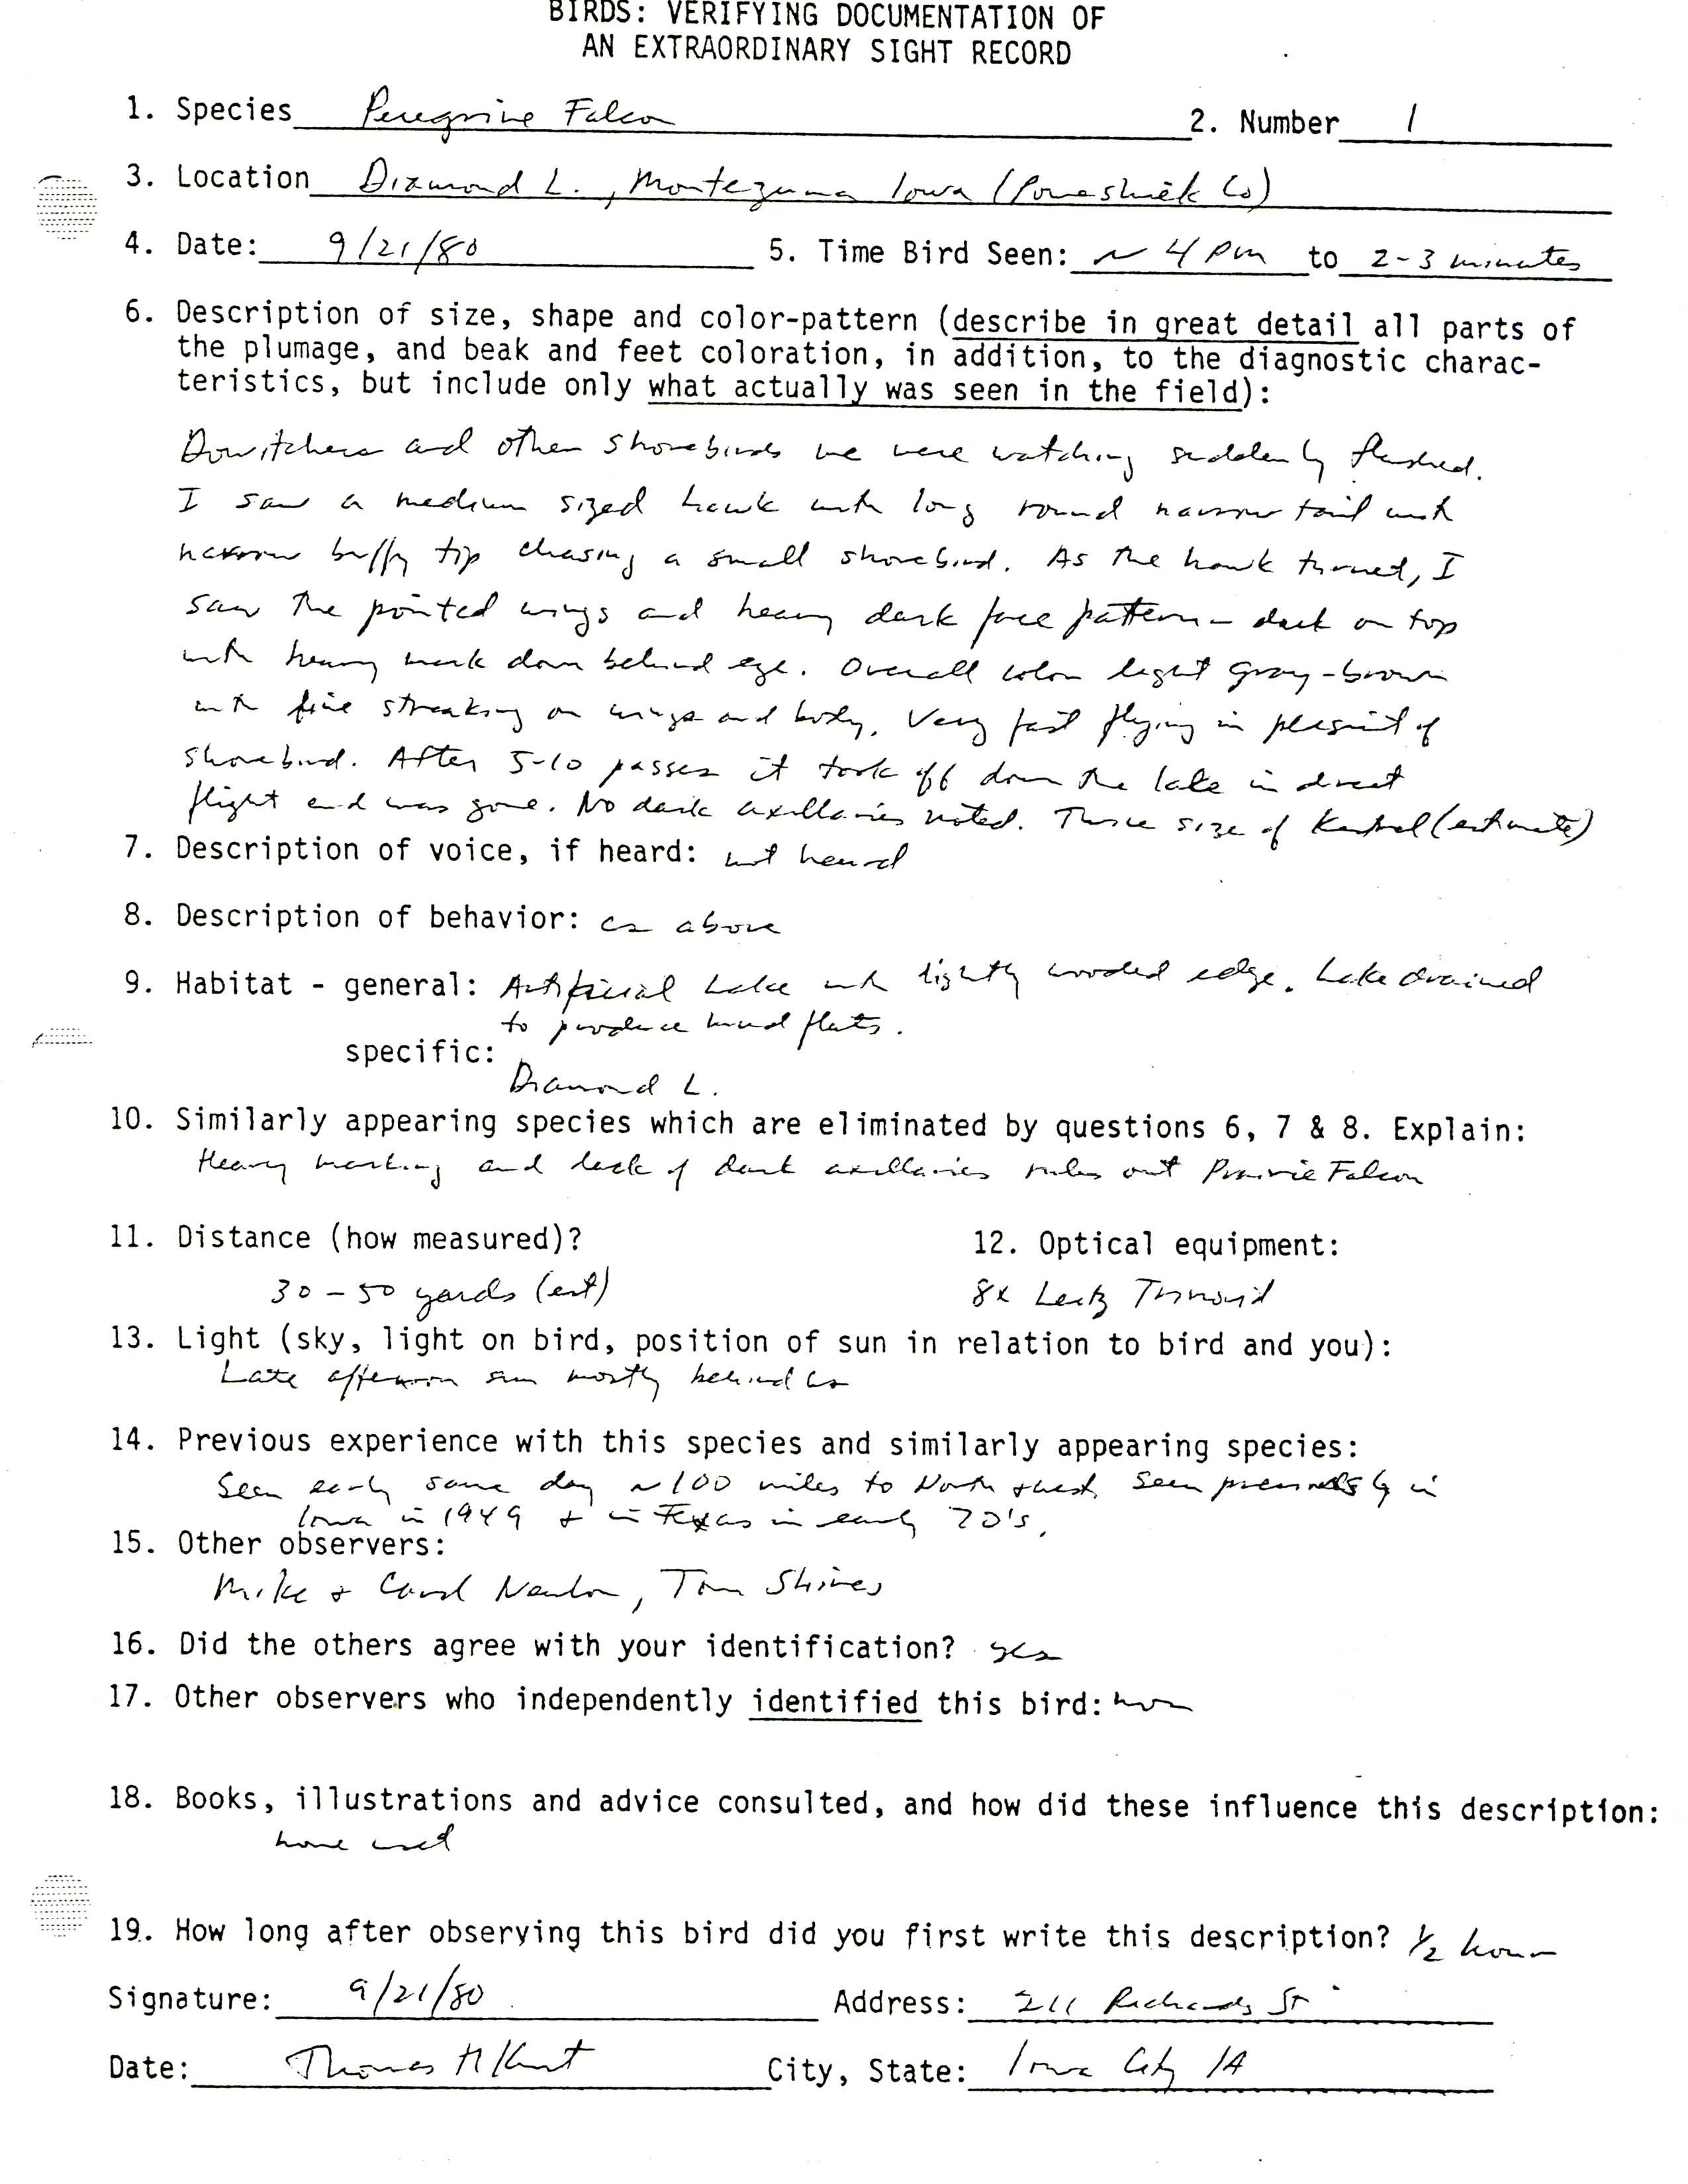 Rare bird documentation form for Peregrine Falcon at Diamond Lake, 1980